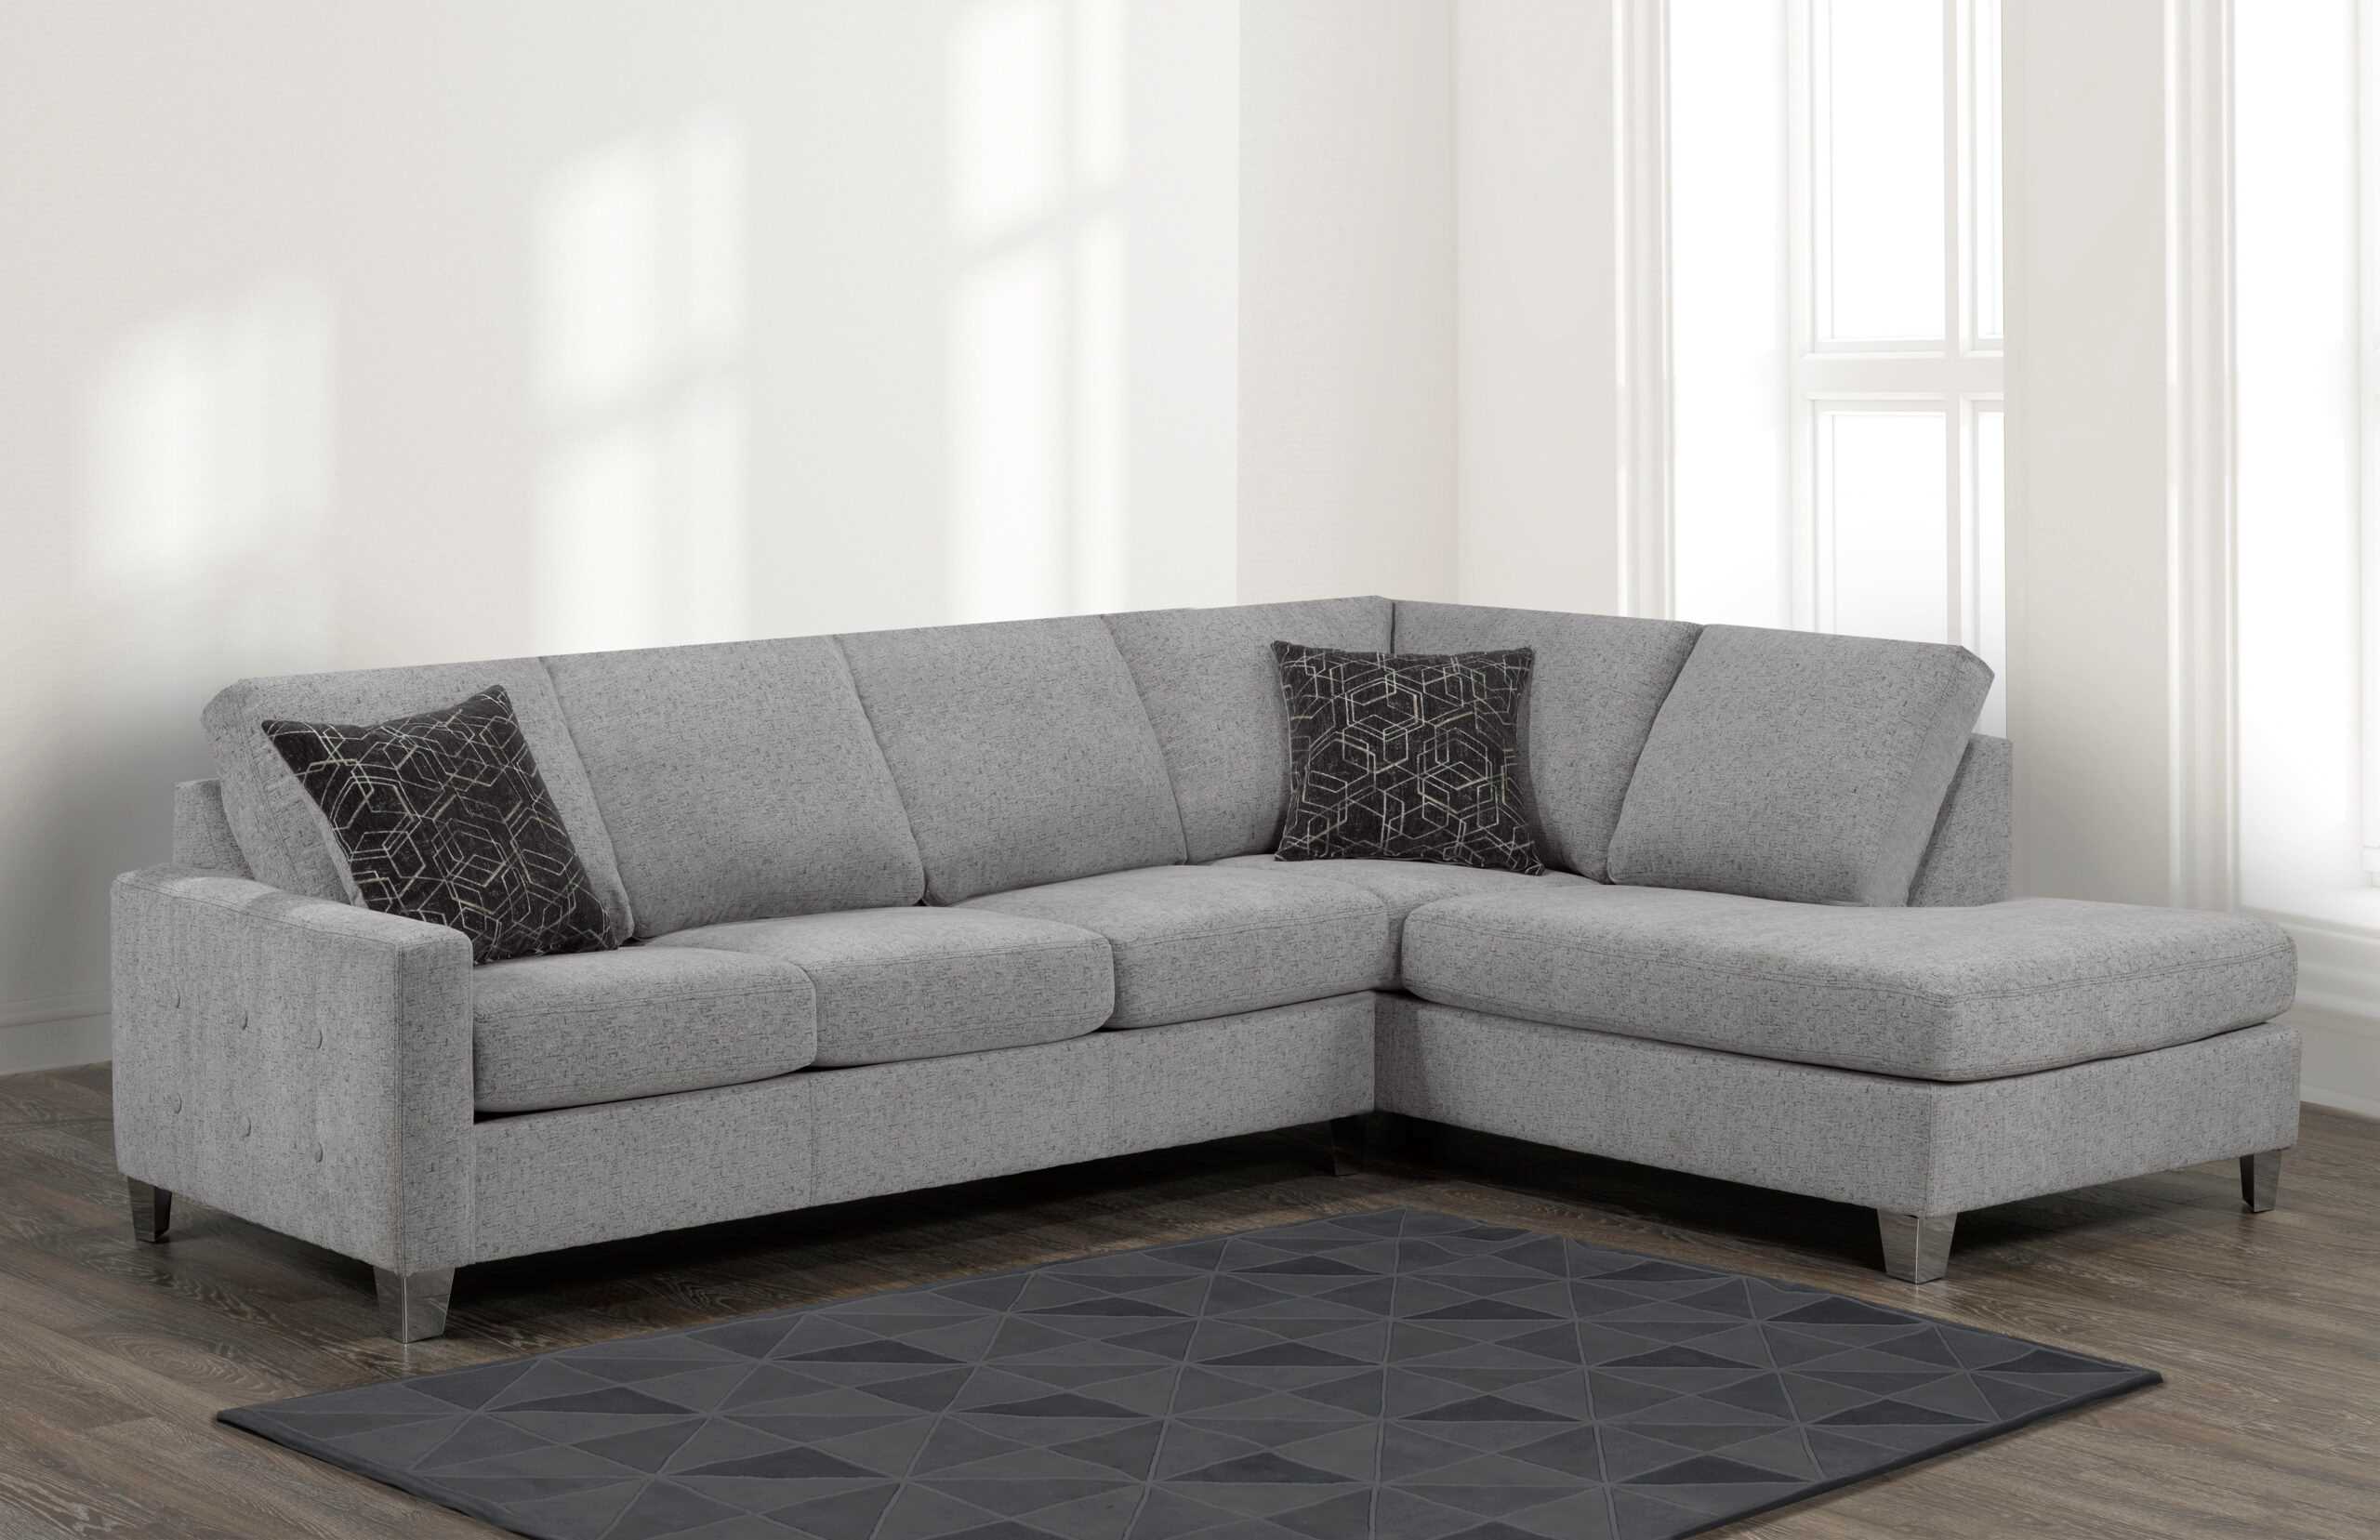 Canadian Made Francesca Ruba Silver Fabric Sectional Sofa 9851